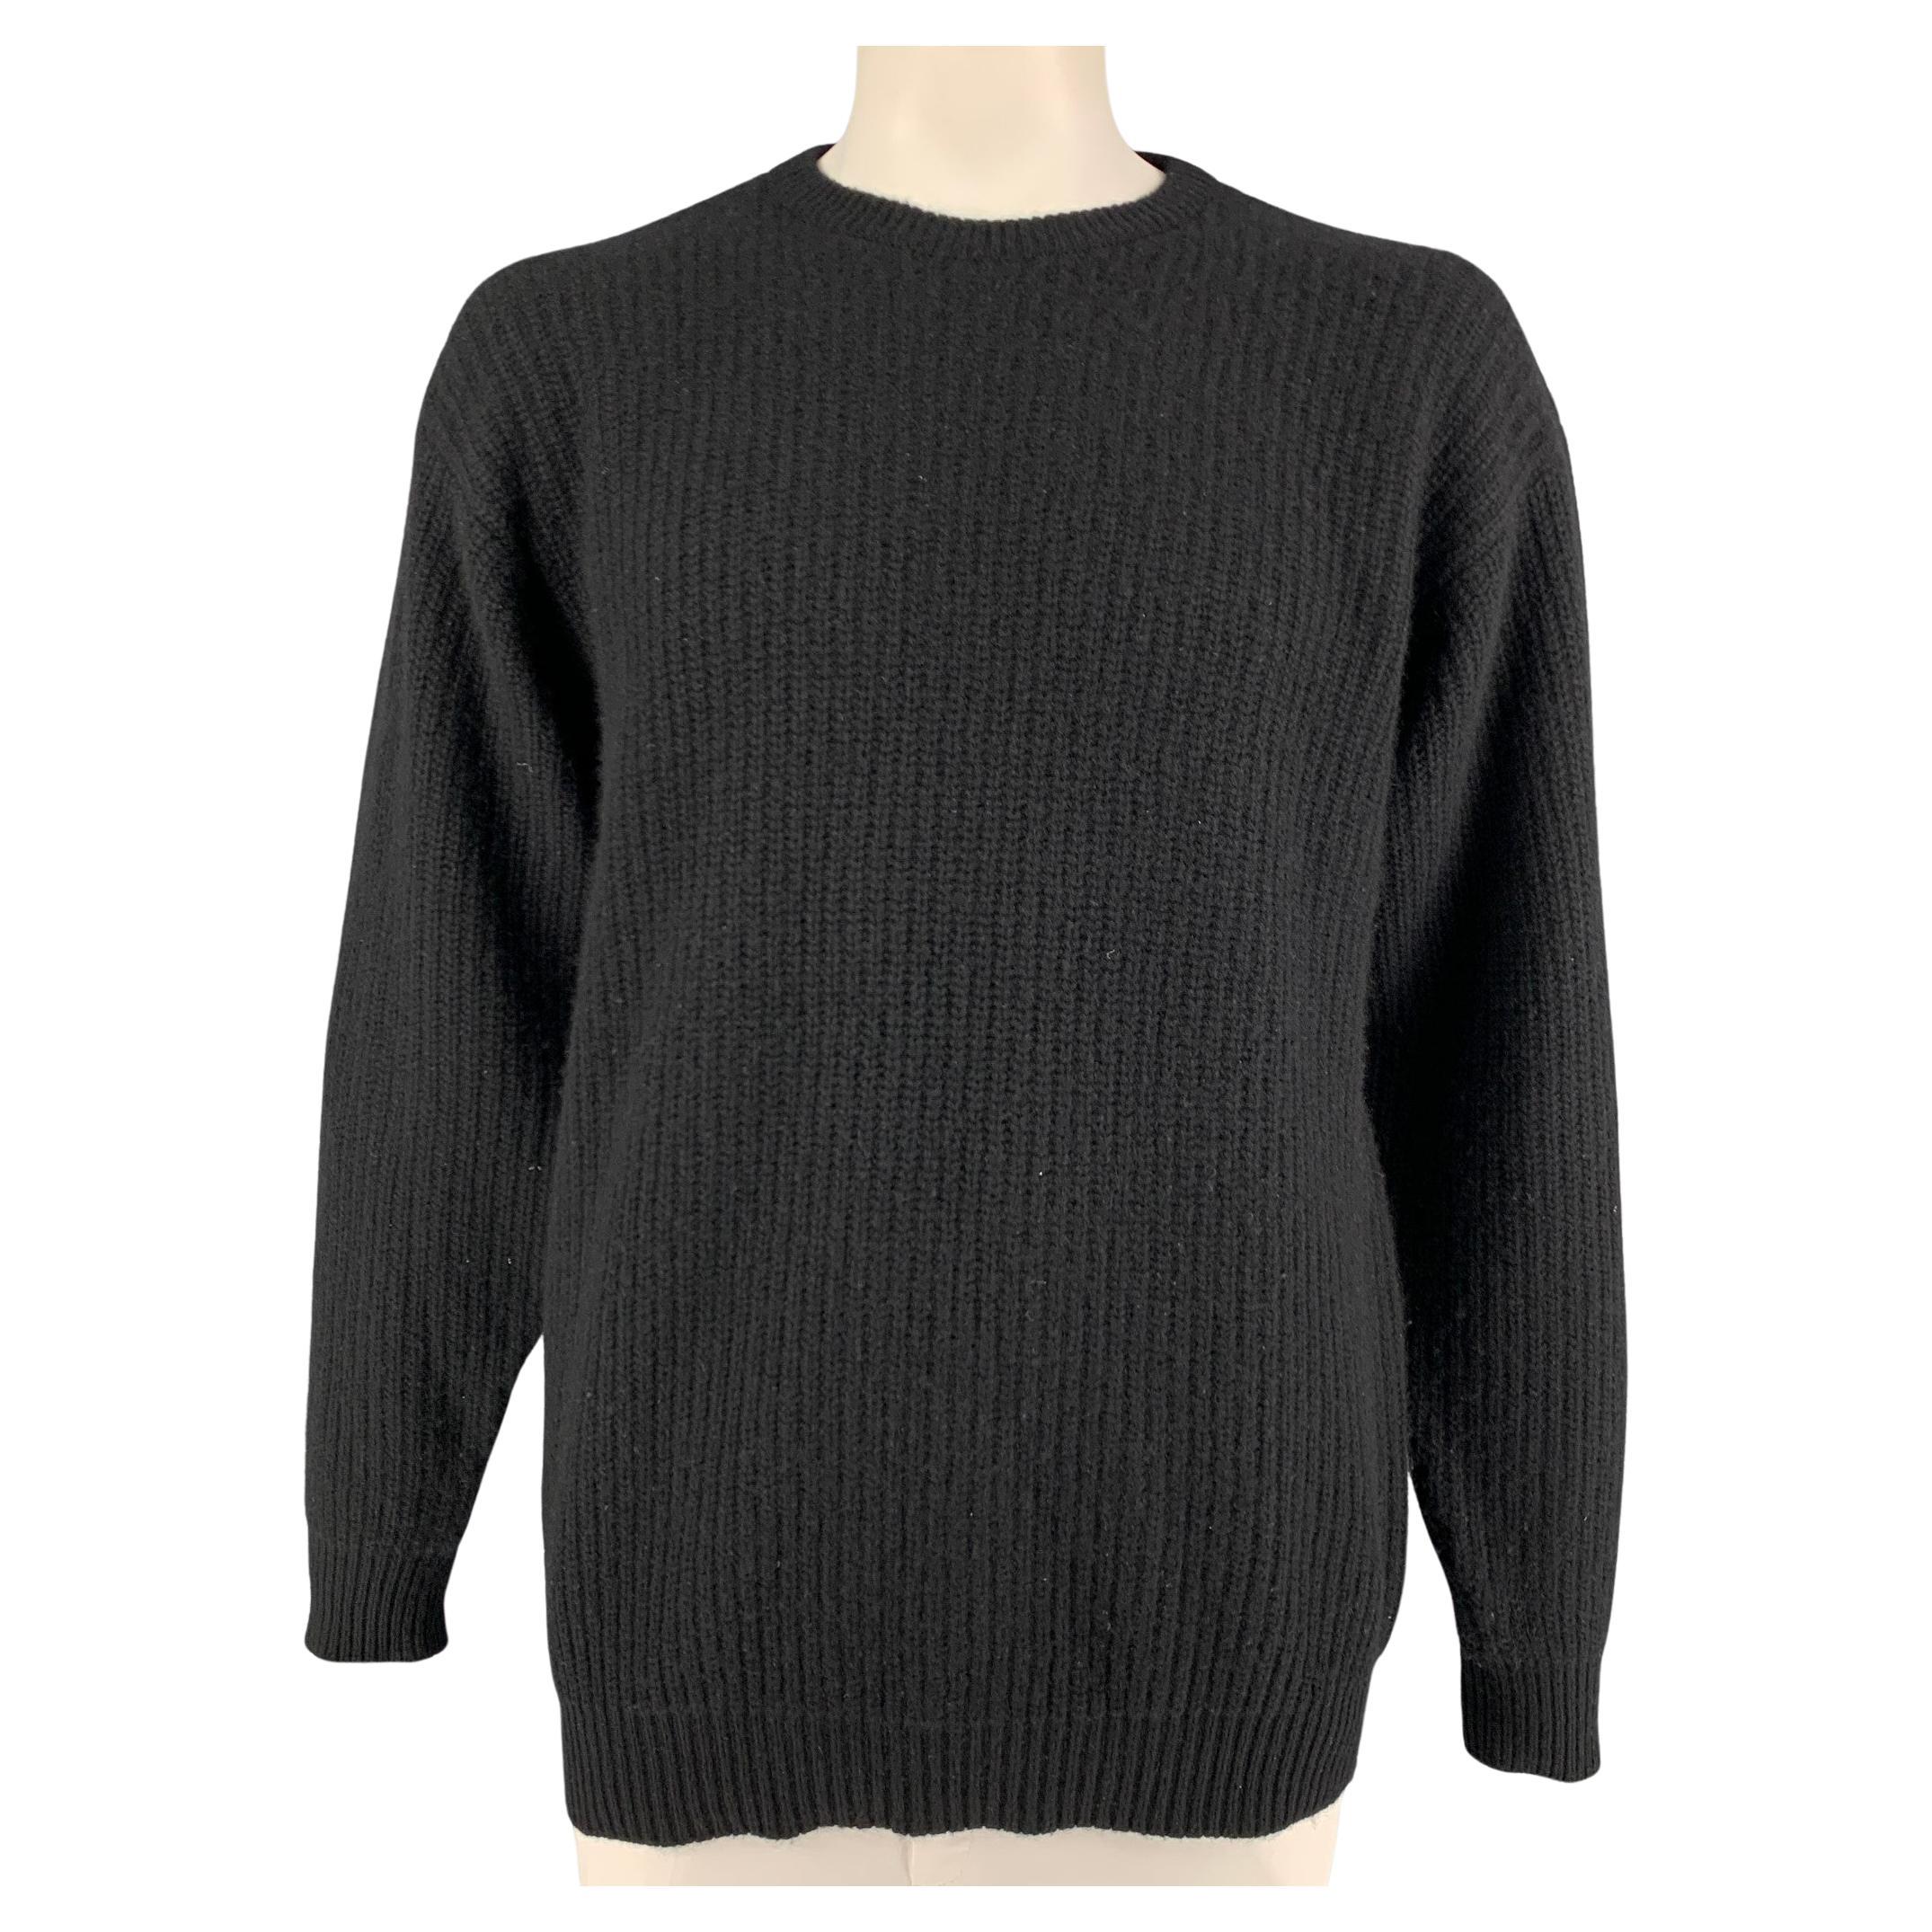 NEIMAN MARCUS Size XXL Black Knitted Cashmere Crew-Neck Sweater